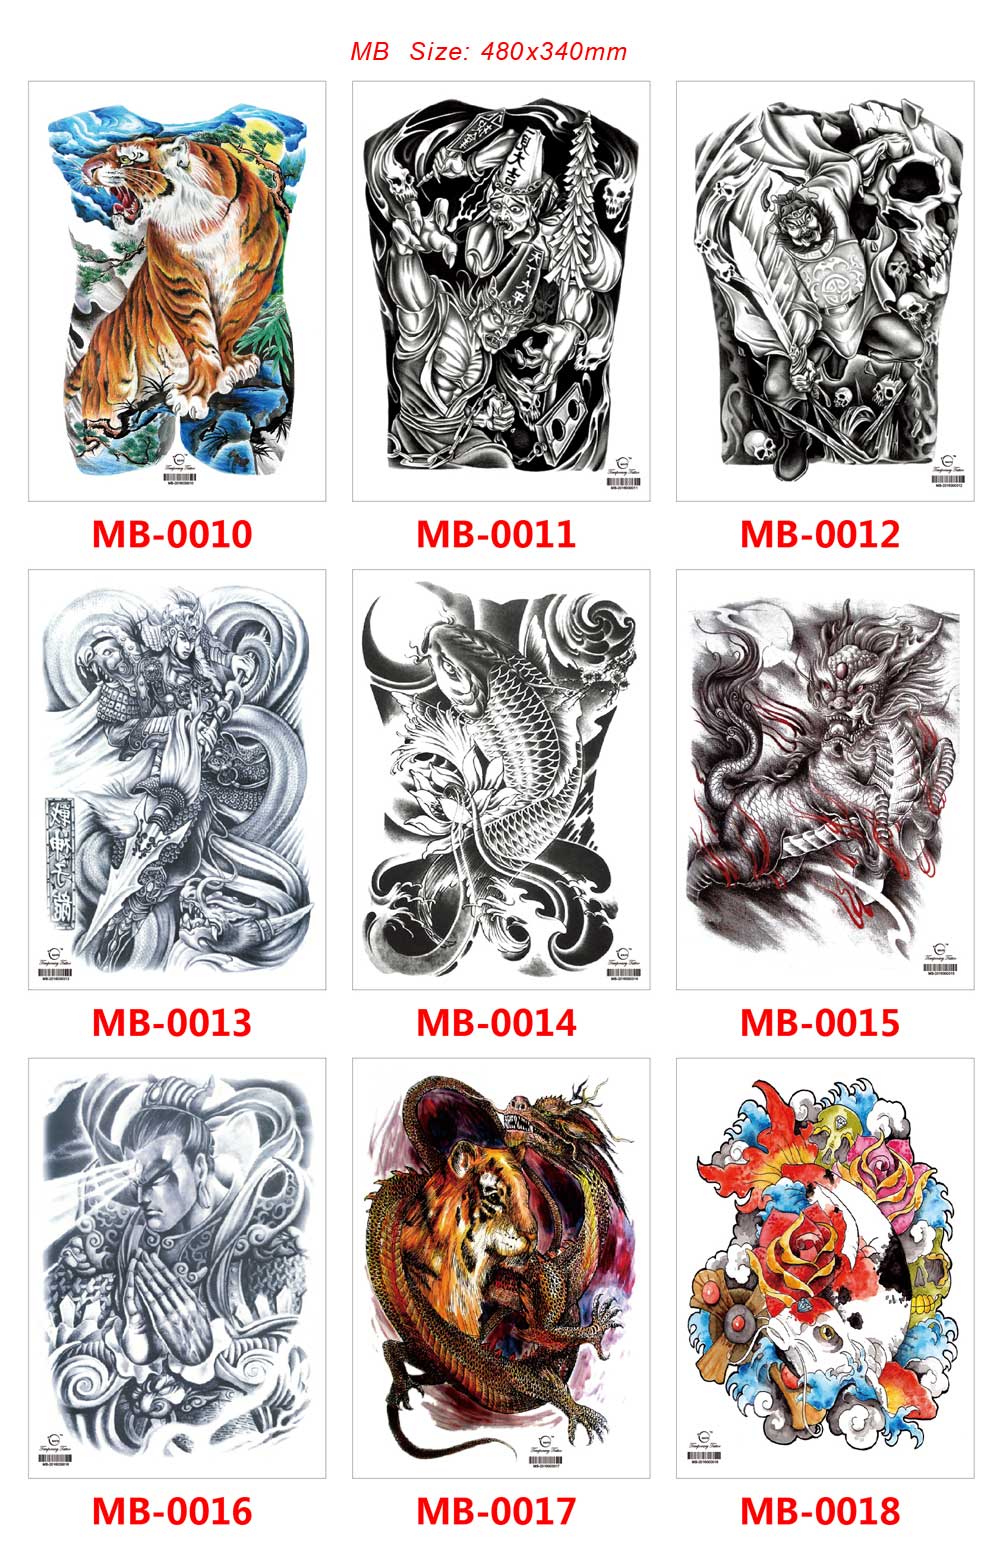 3 Sheets Super Large Full Back Tattoo Stickers Hero Demon Dragon